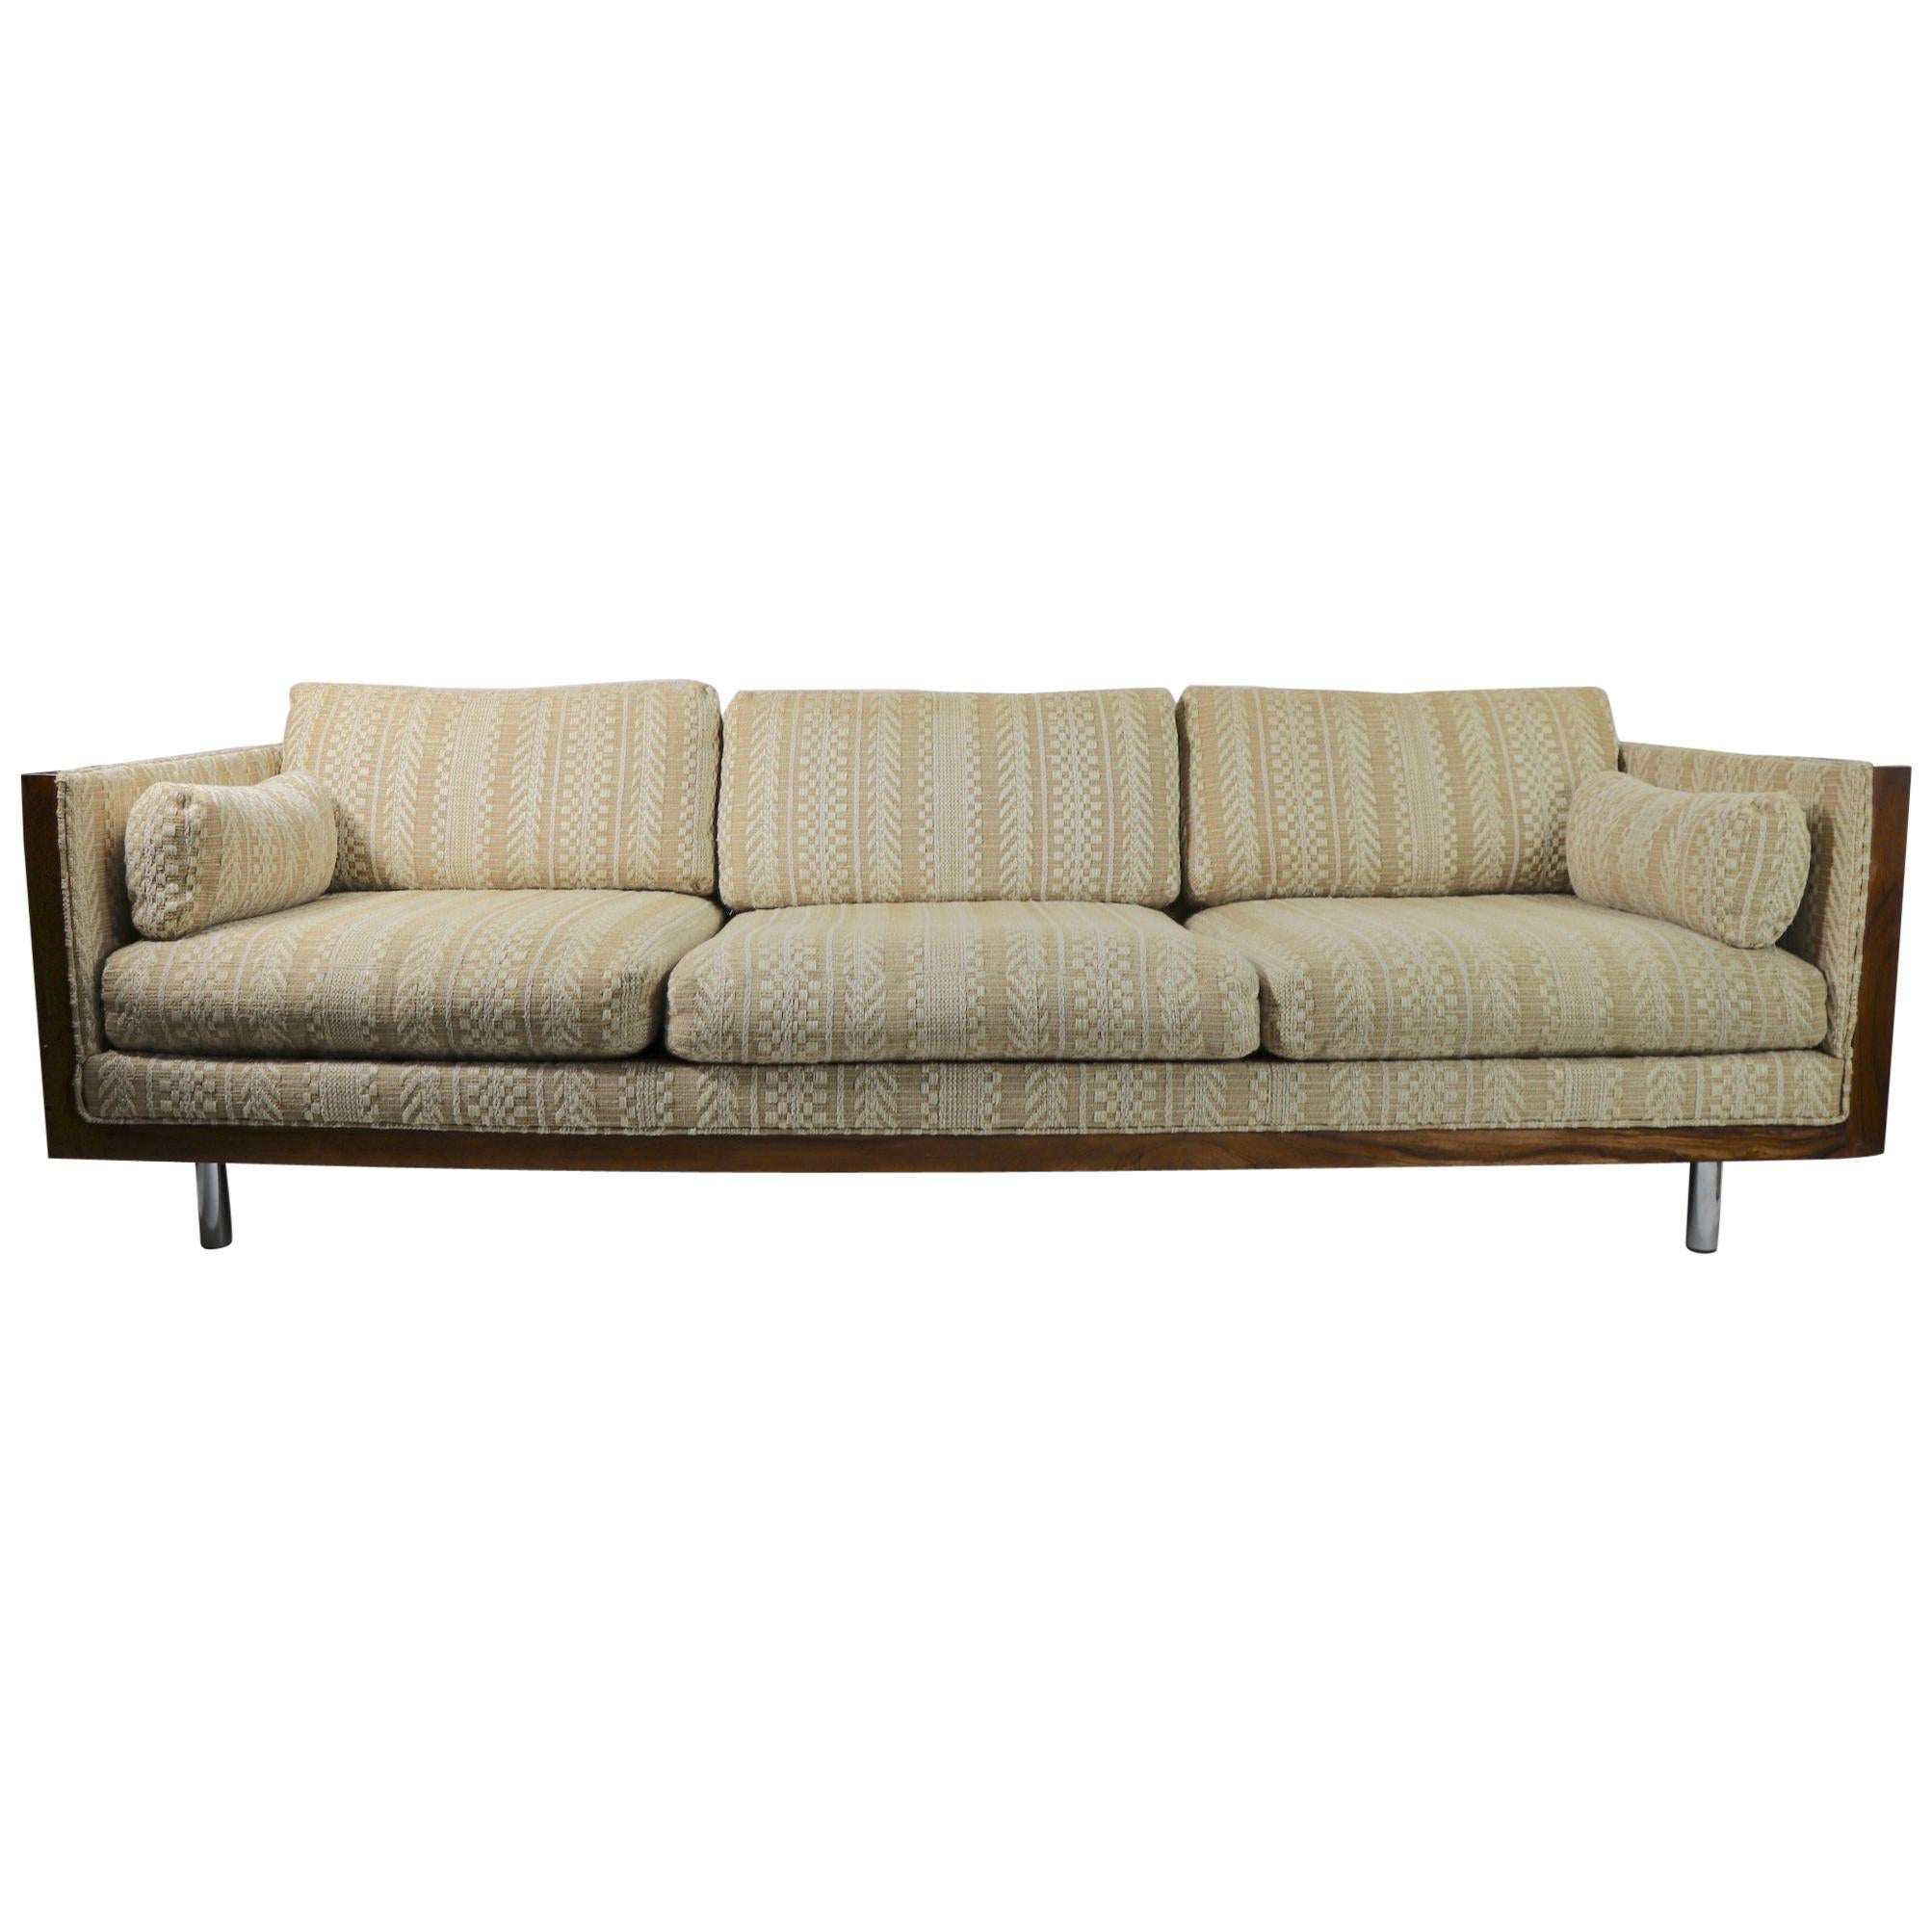 Custom Rosewood Box Sofa by Carlton After Milo Baughman